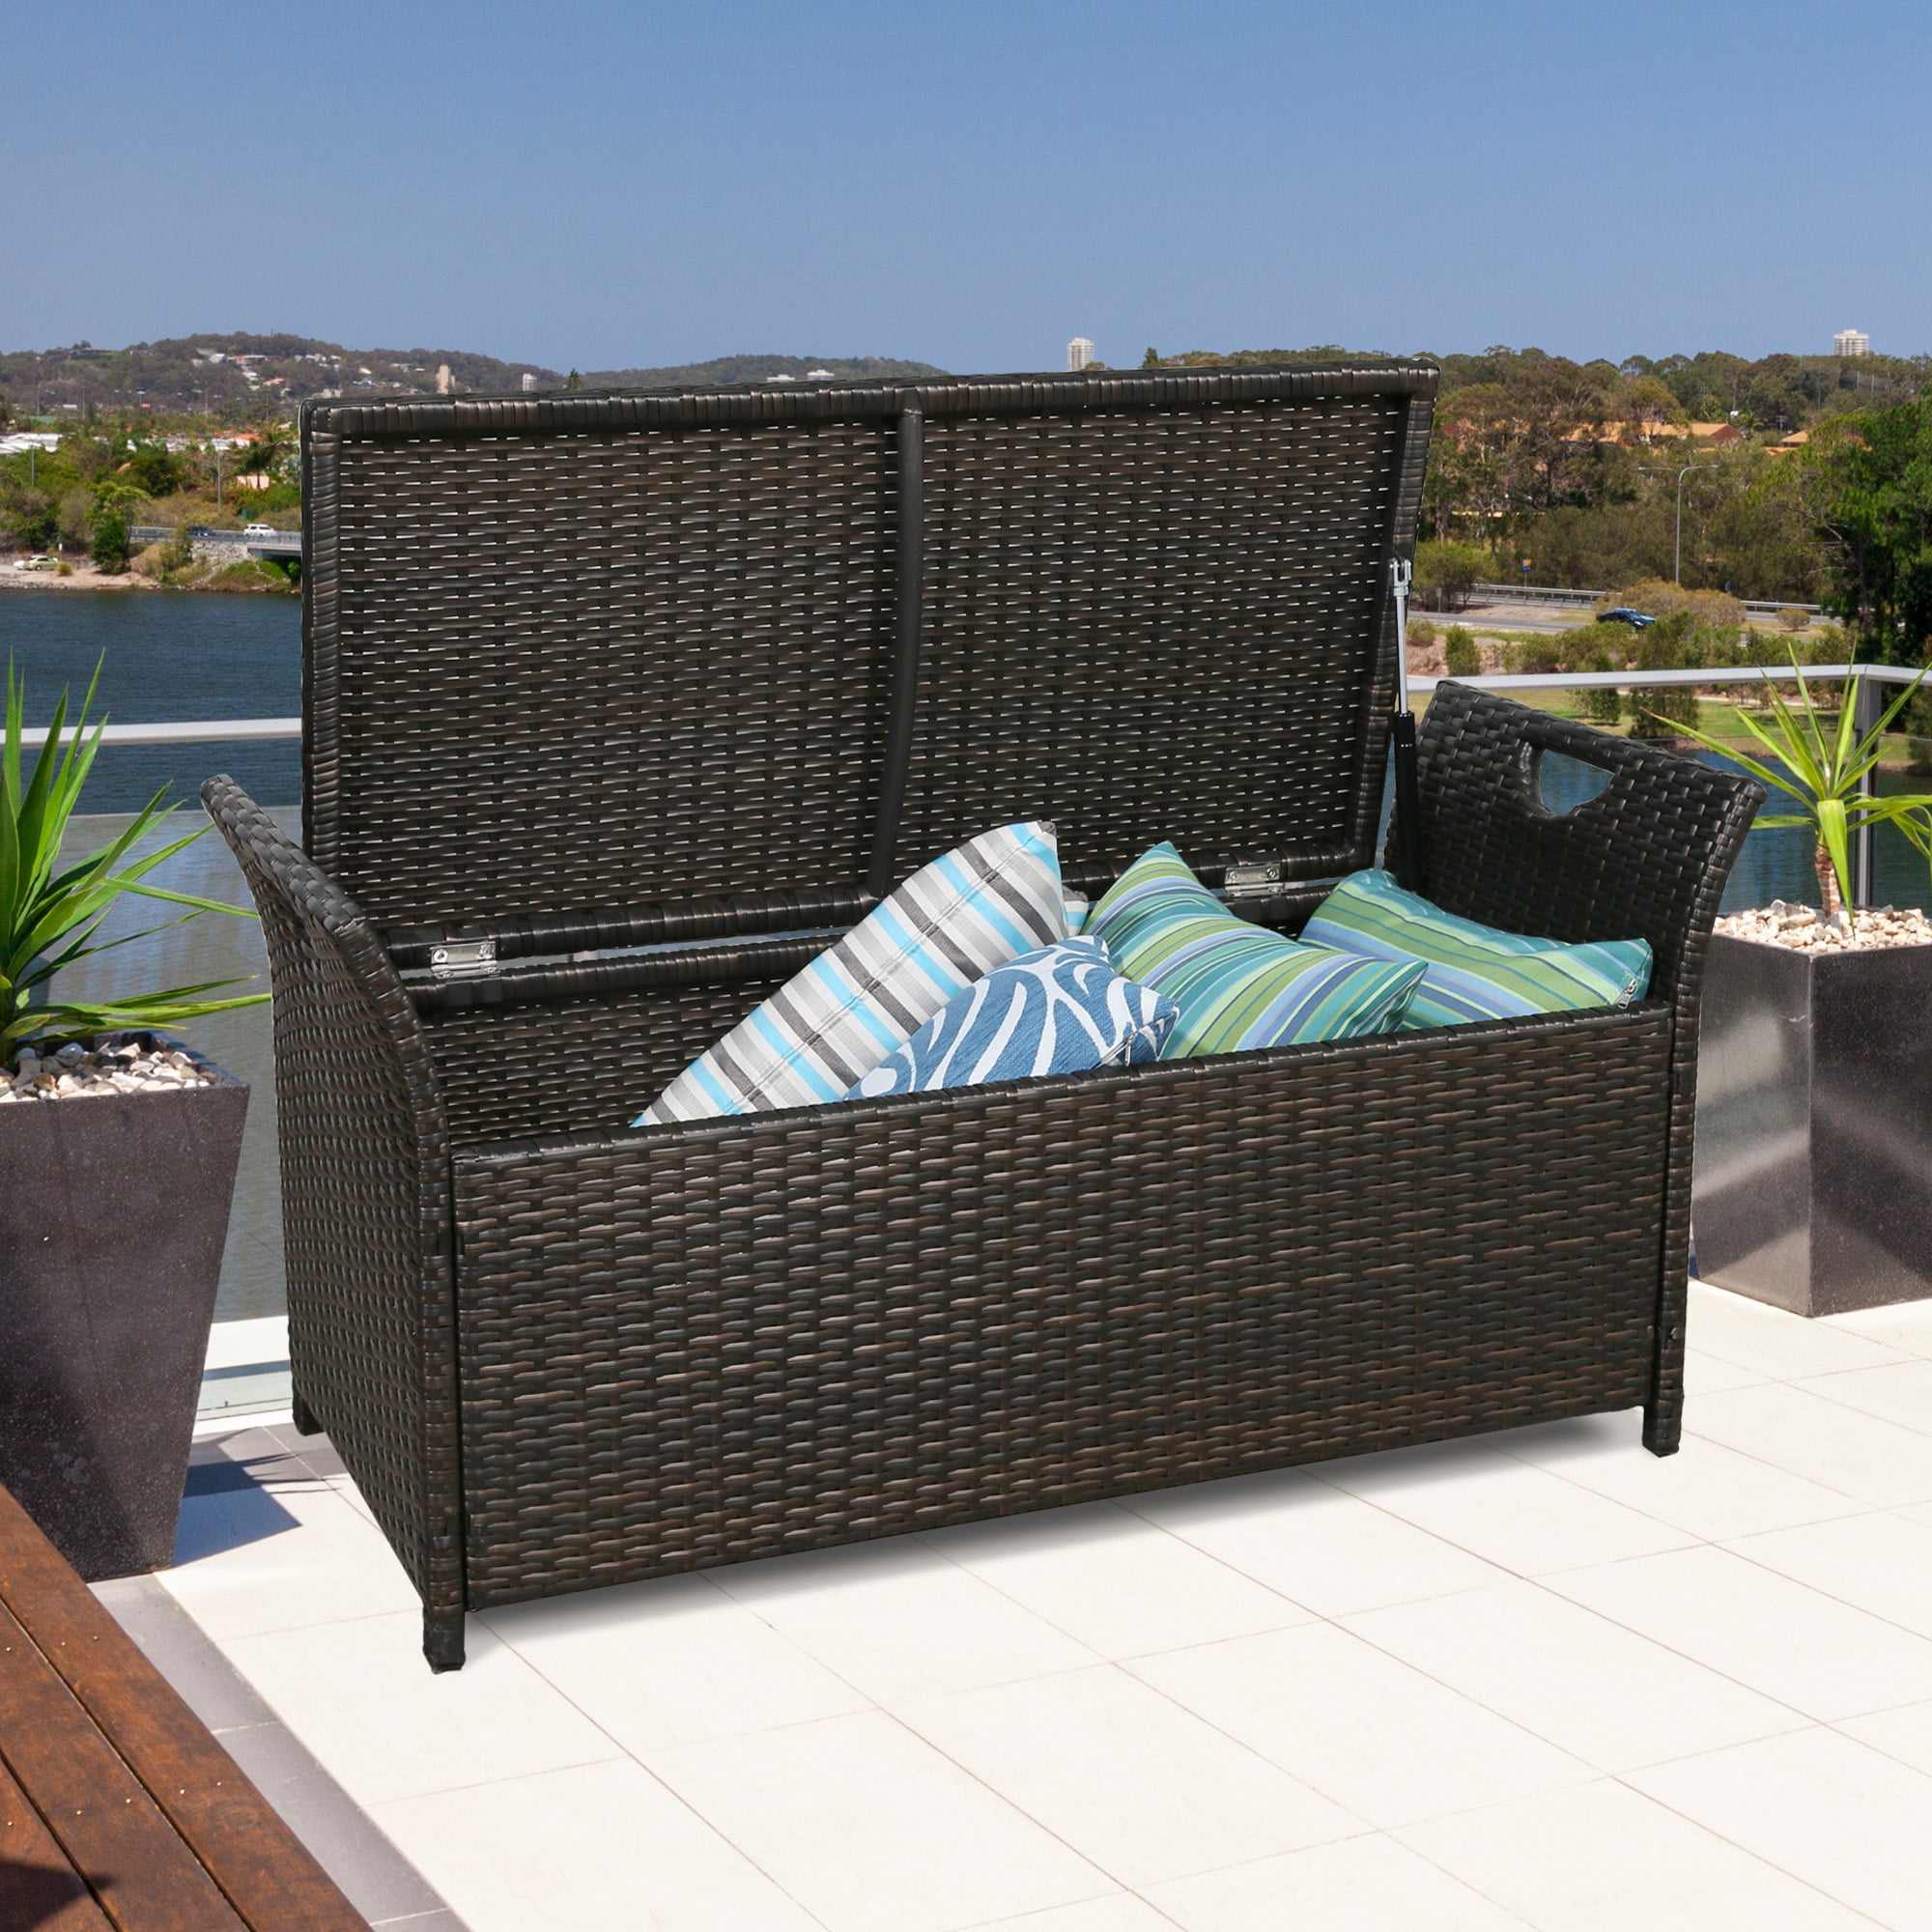 Ulax Furniture Patio Wicker Storage, Outdoor Wicker Storage Bench With Cushion